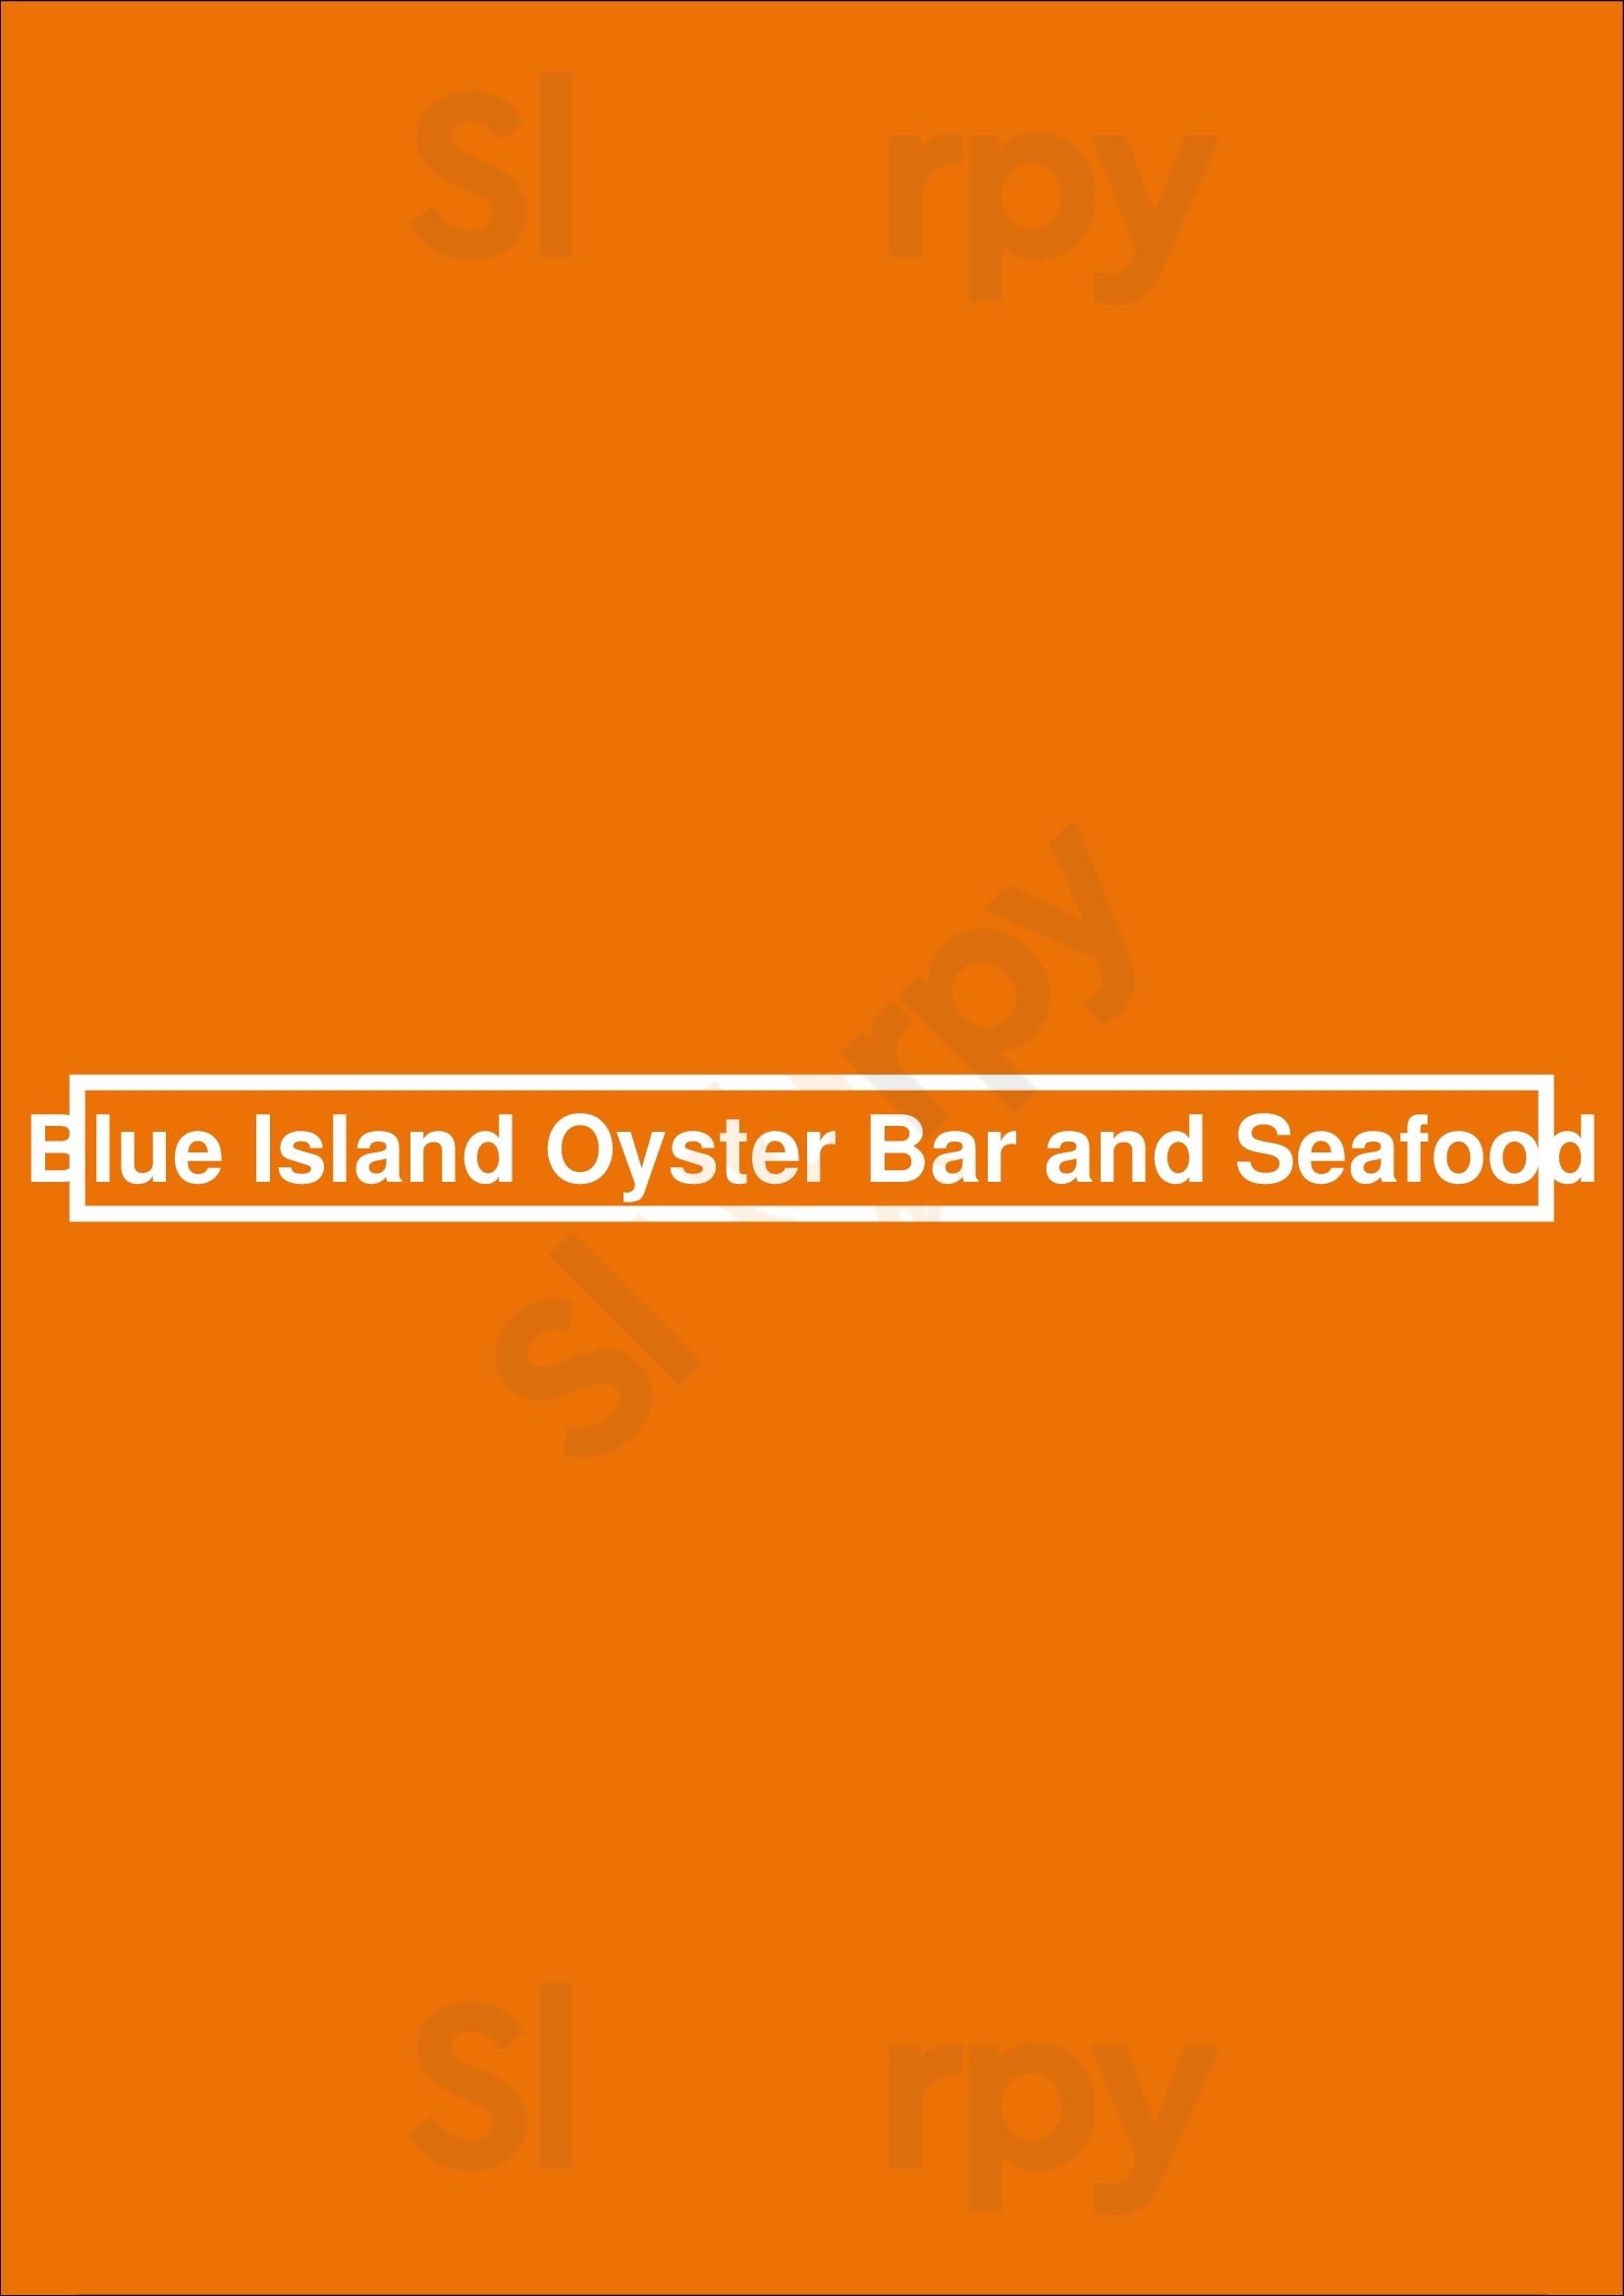 Blue Island Oyster Bar And Seafood Denver Menu - 1